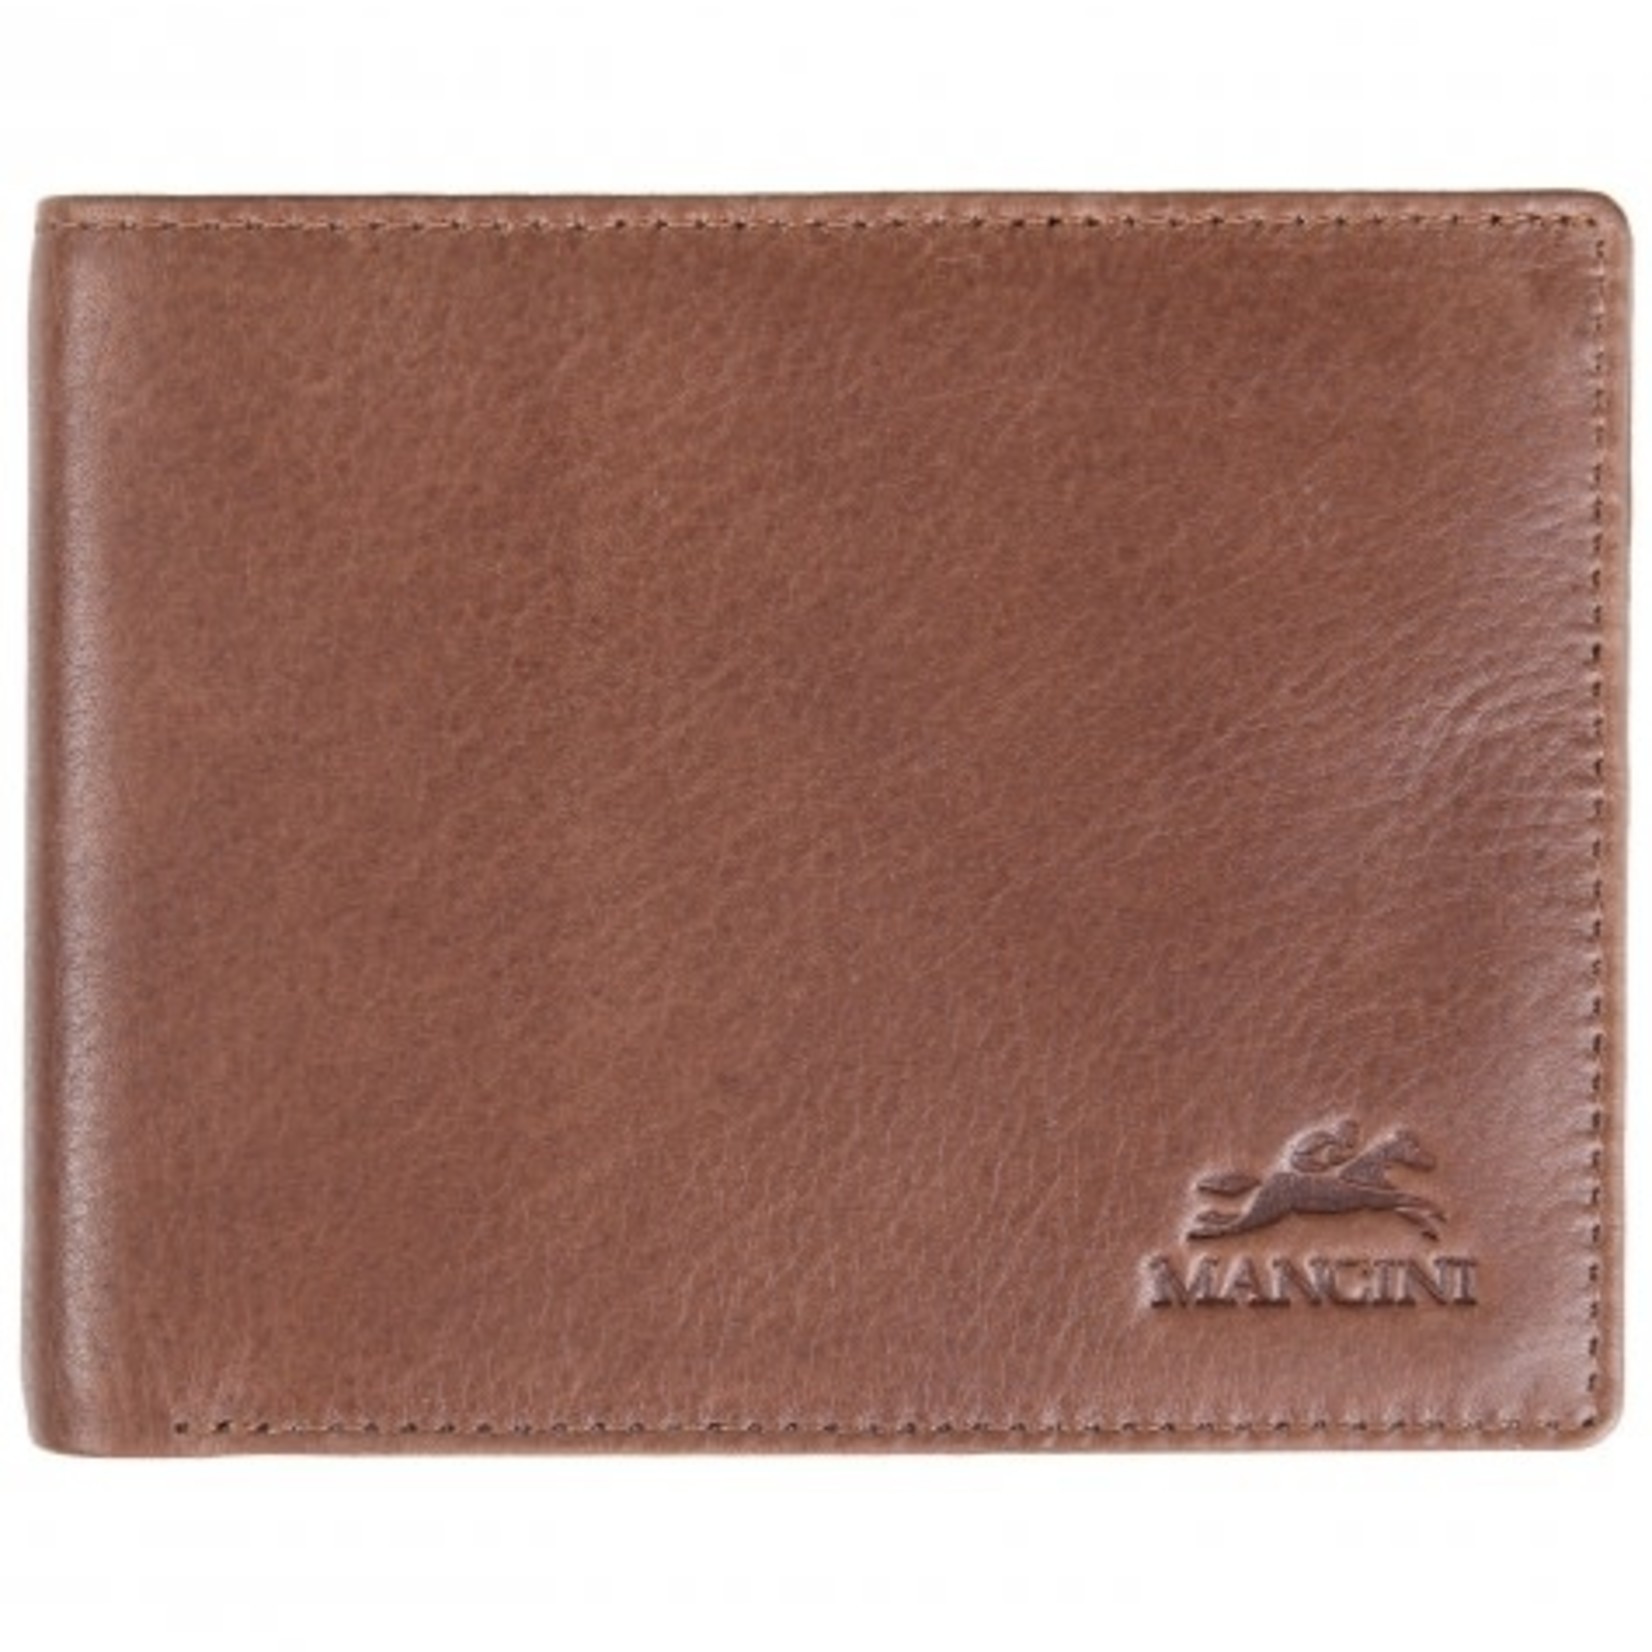 Mancini Men's Leather RFID Billfold